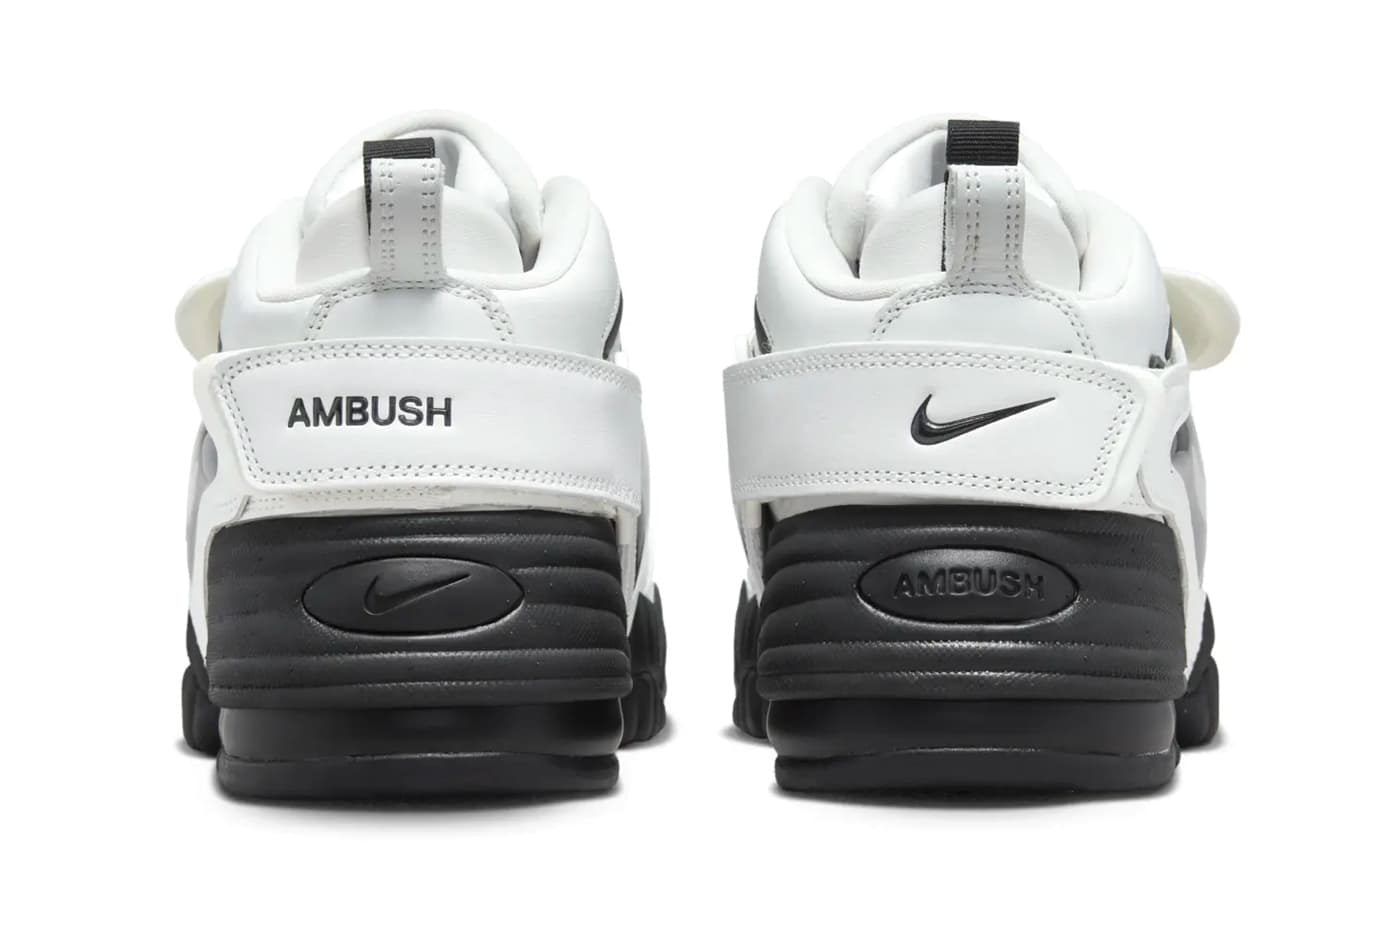 AMBUSH x Nike Air Adjust Force "White"